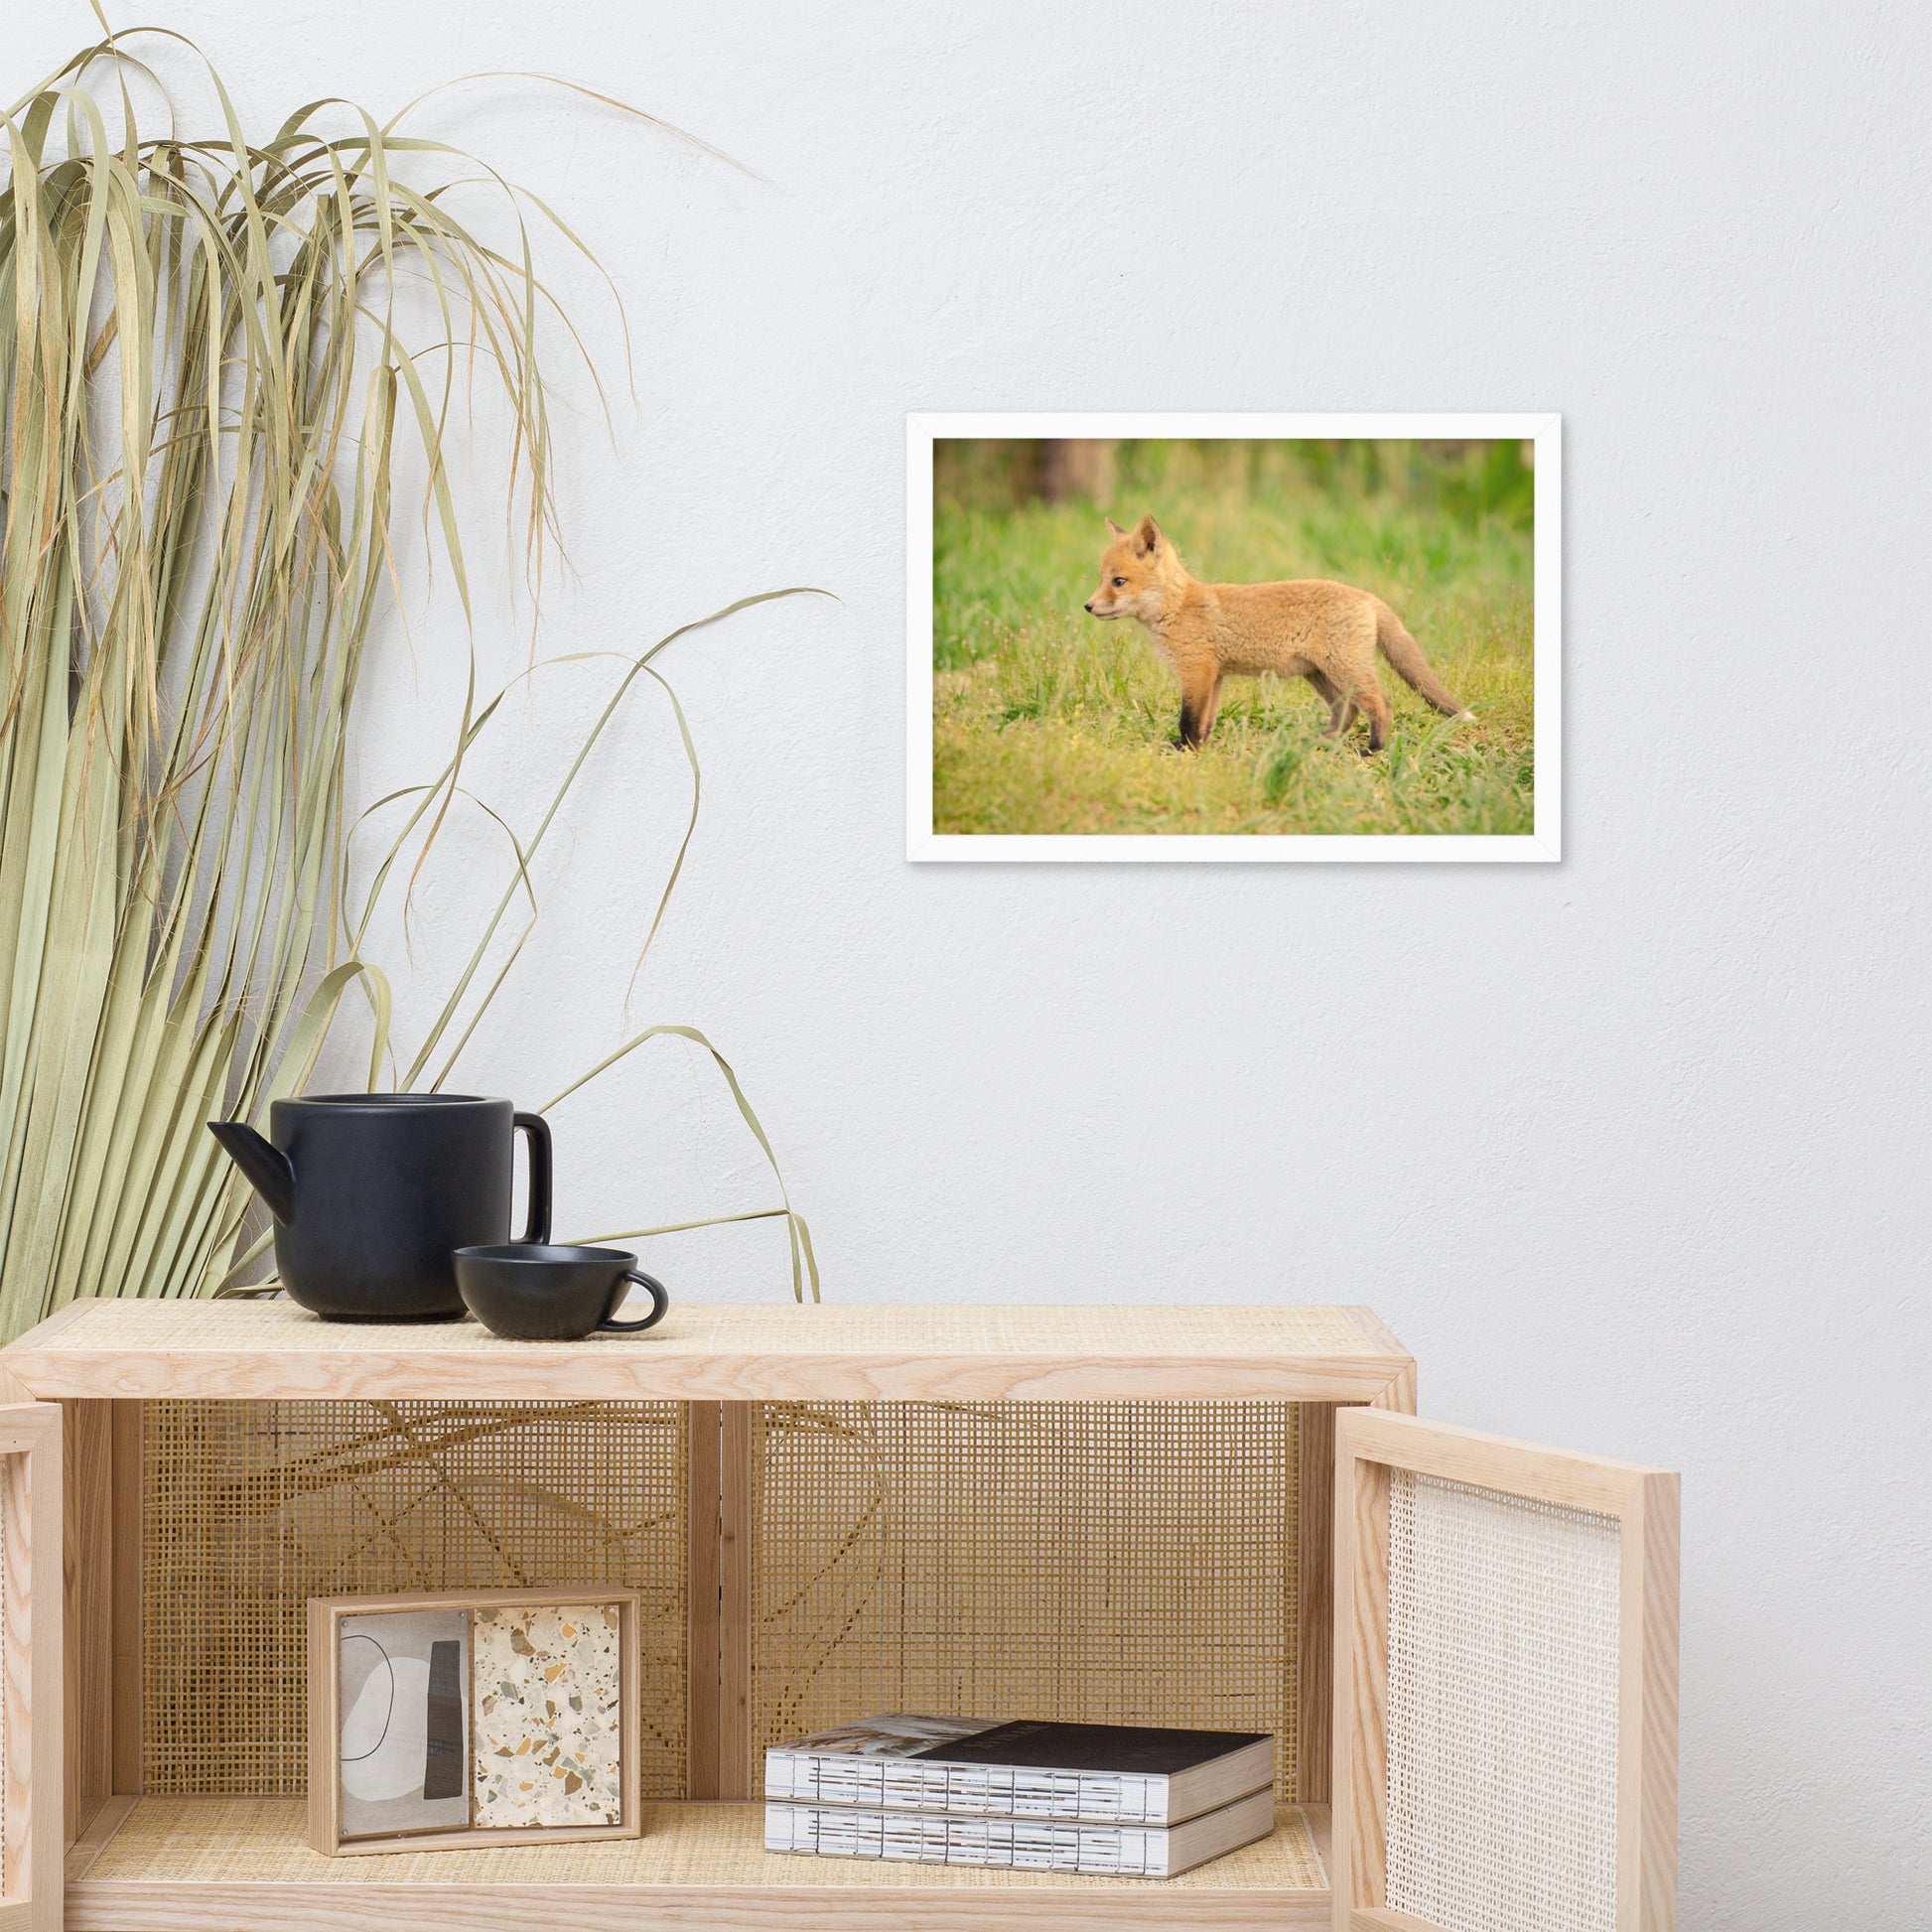 Nursery Room Wall Decor: Baby Fox Pup In Meadow/ Animal / Wildlife / Nature Photographic Artwork - Framed Artwork - Wall Decor